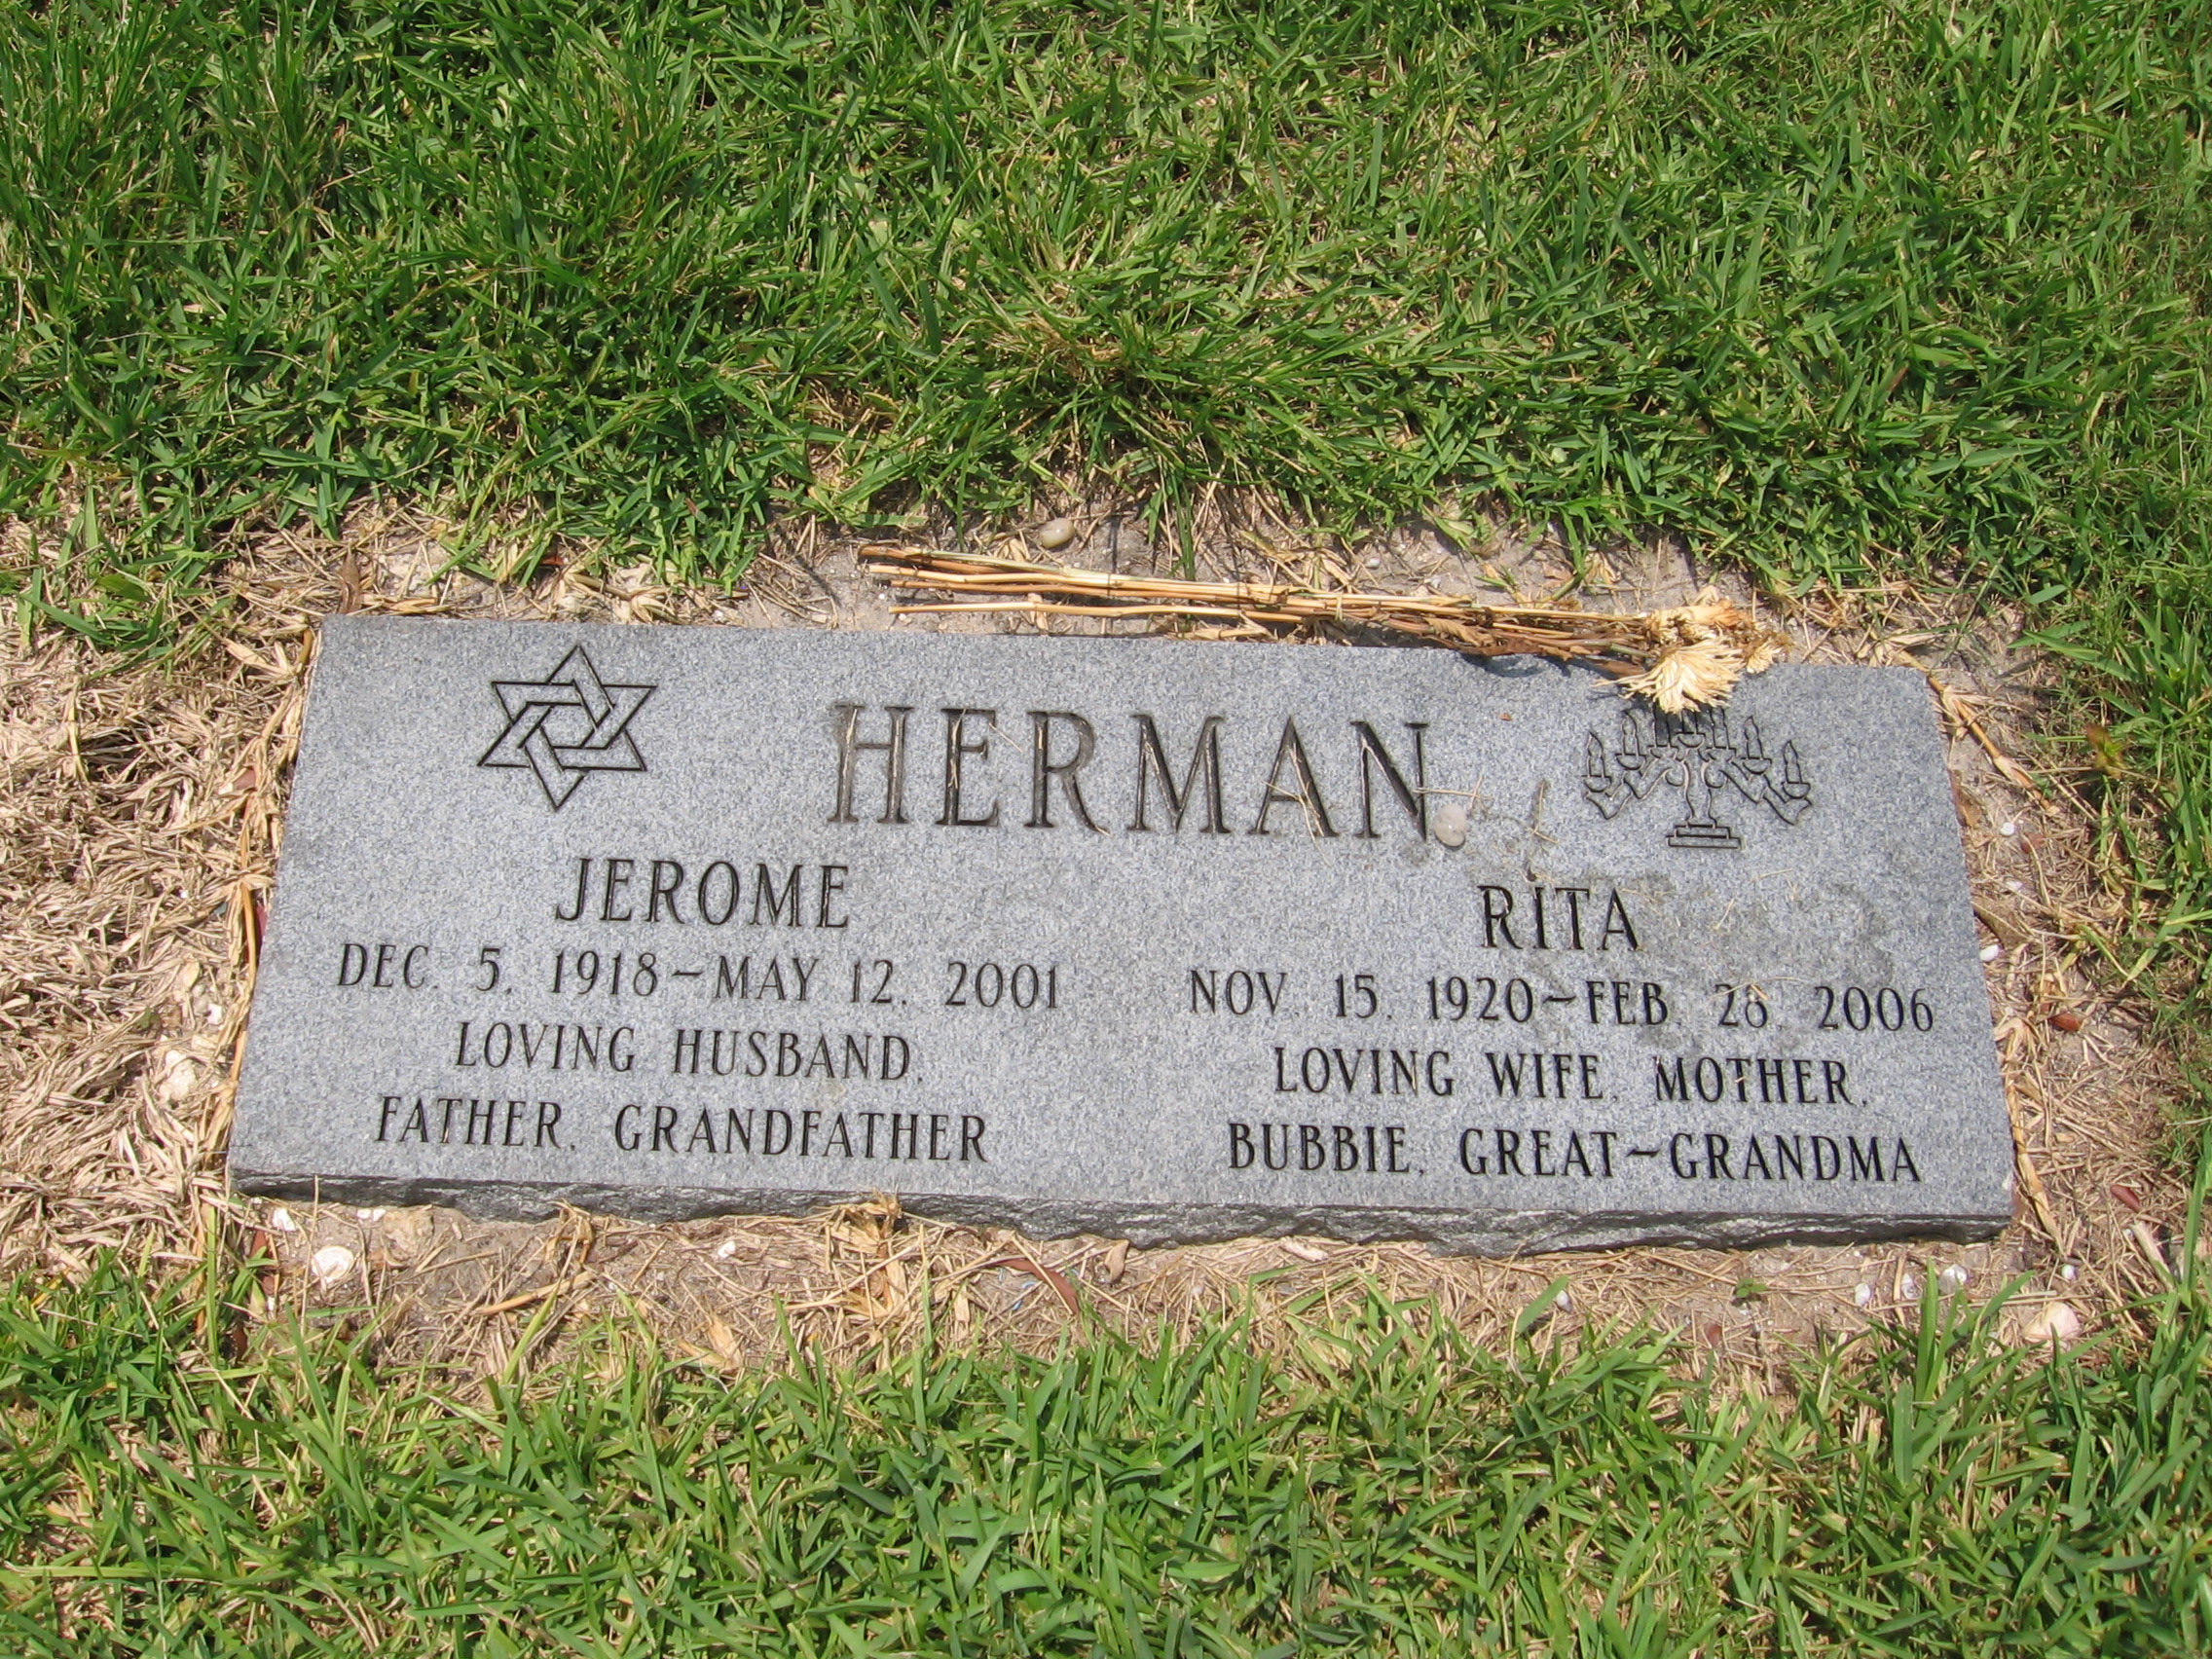 Jerome Herman